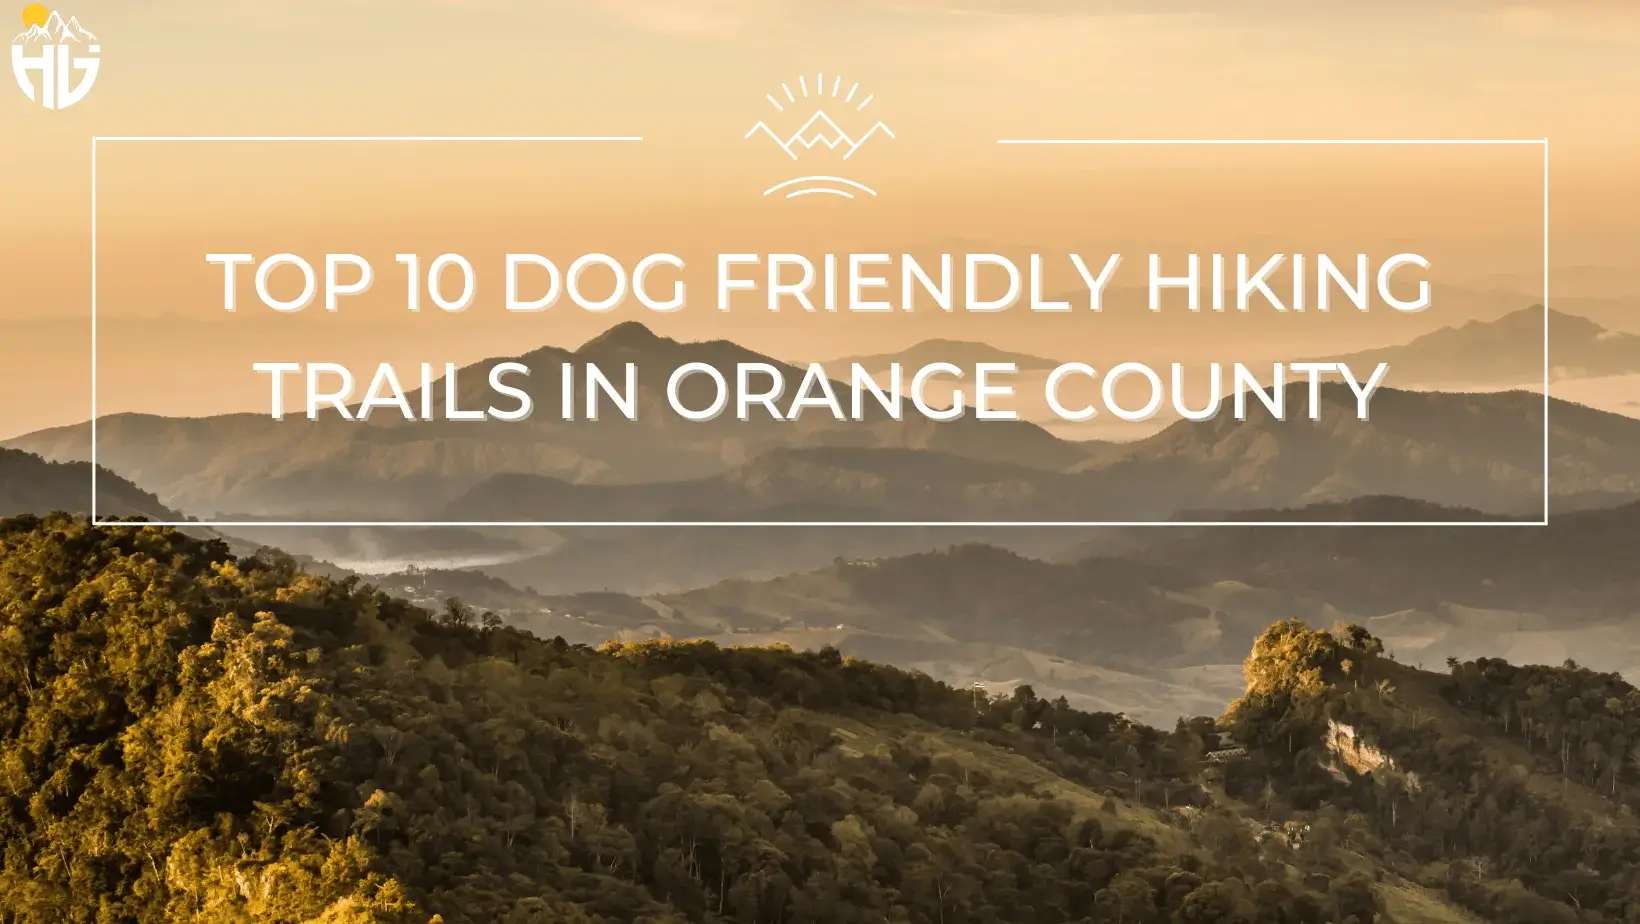 Top 10 Dog Friendly Hiking Trails in Orange County